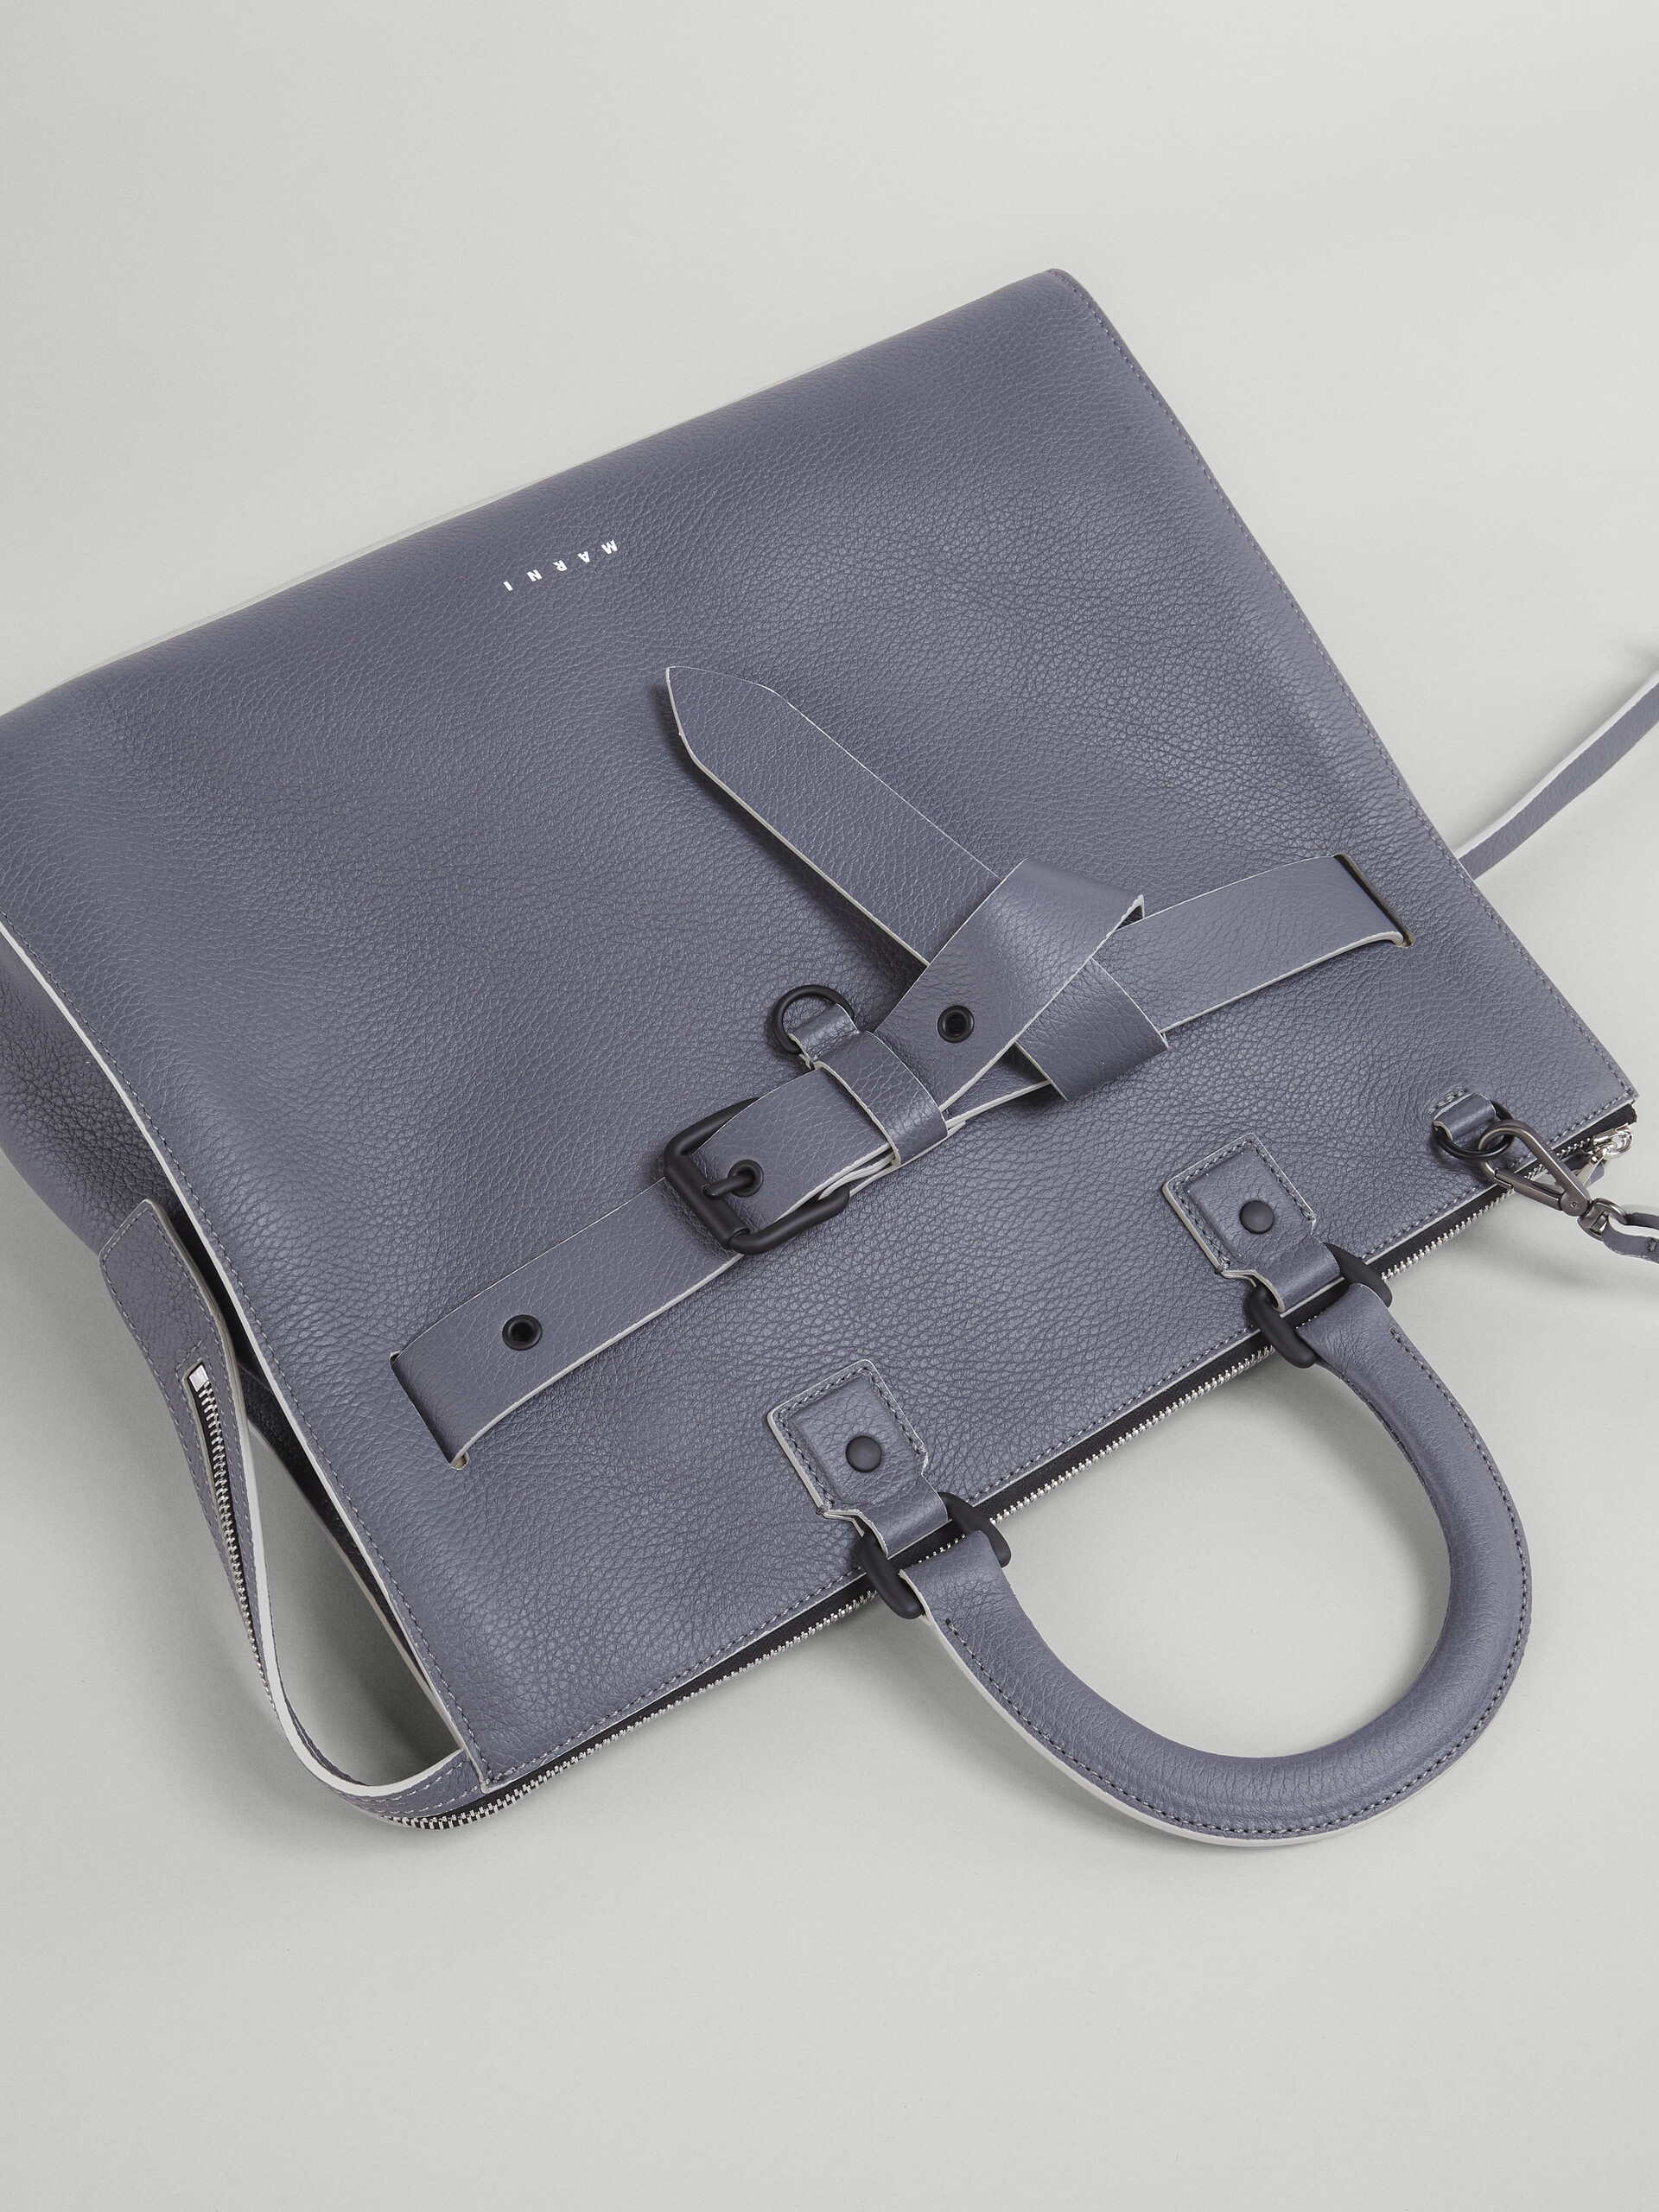 TREASURE bag in grained calf leather - Handbag - Image 4